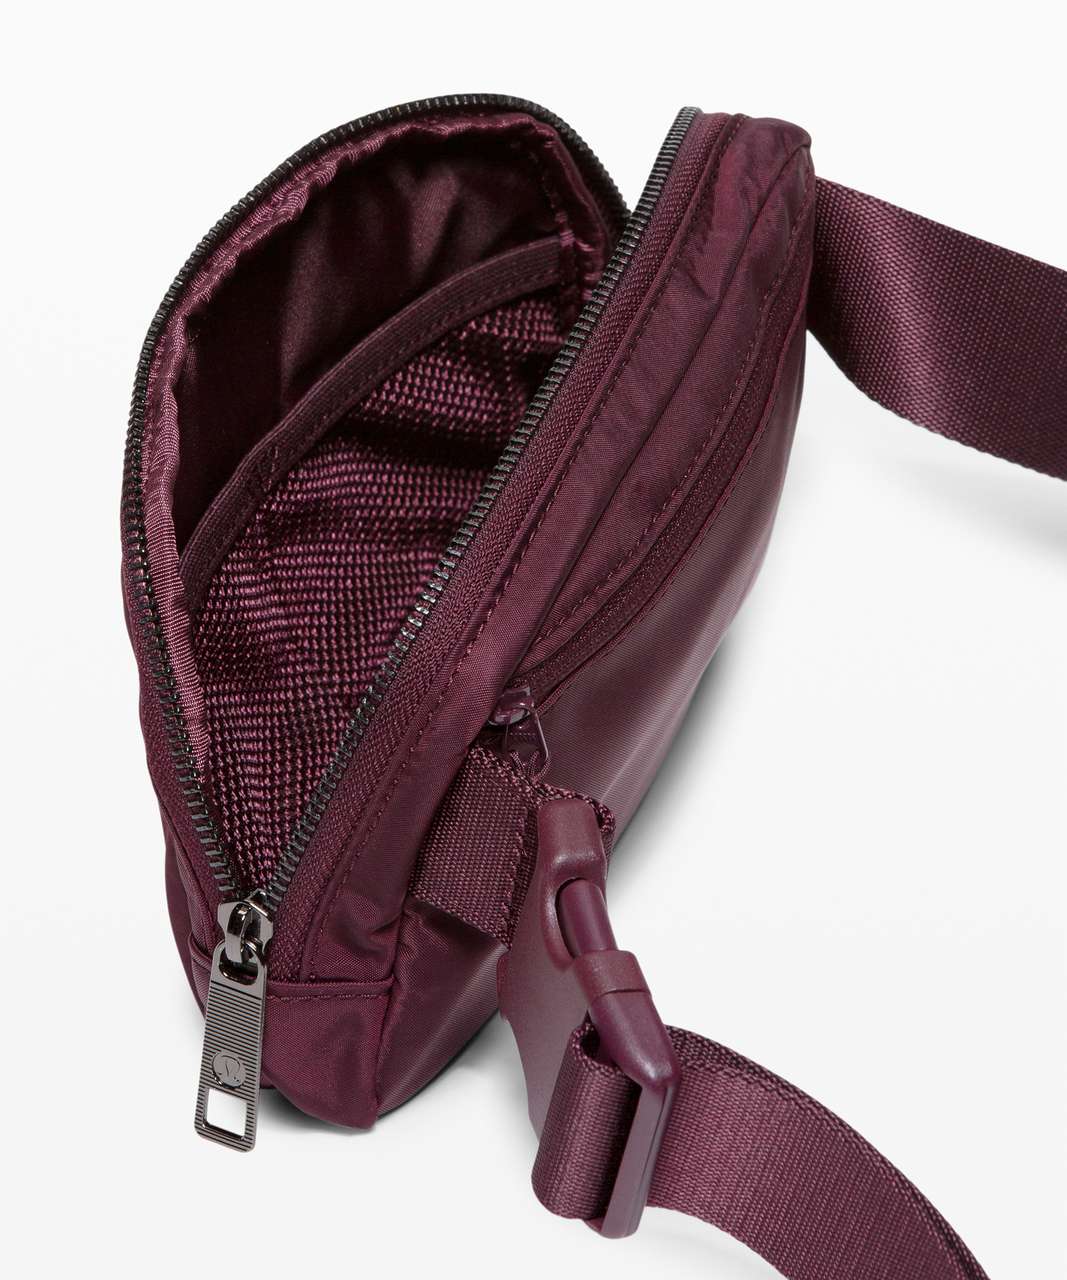 Hamilton Belt Bag / Cross-body - Red